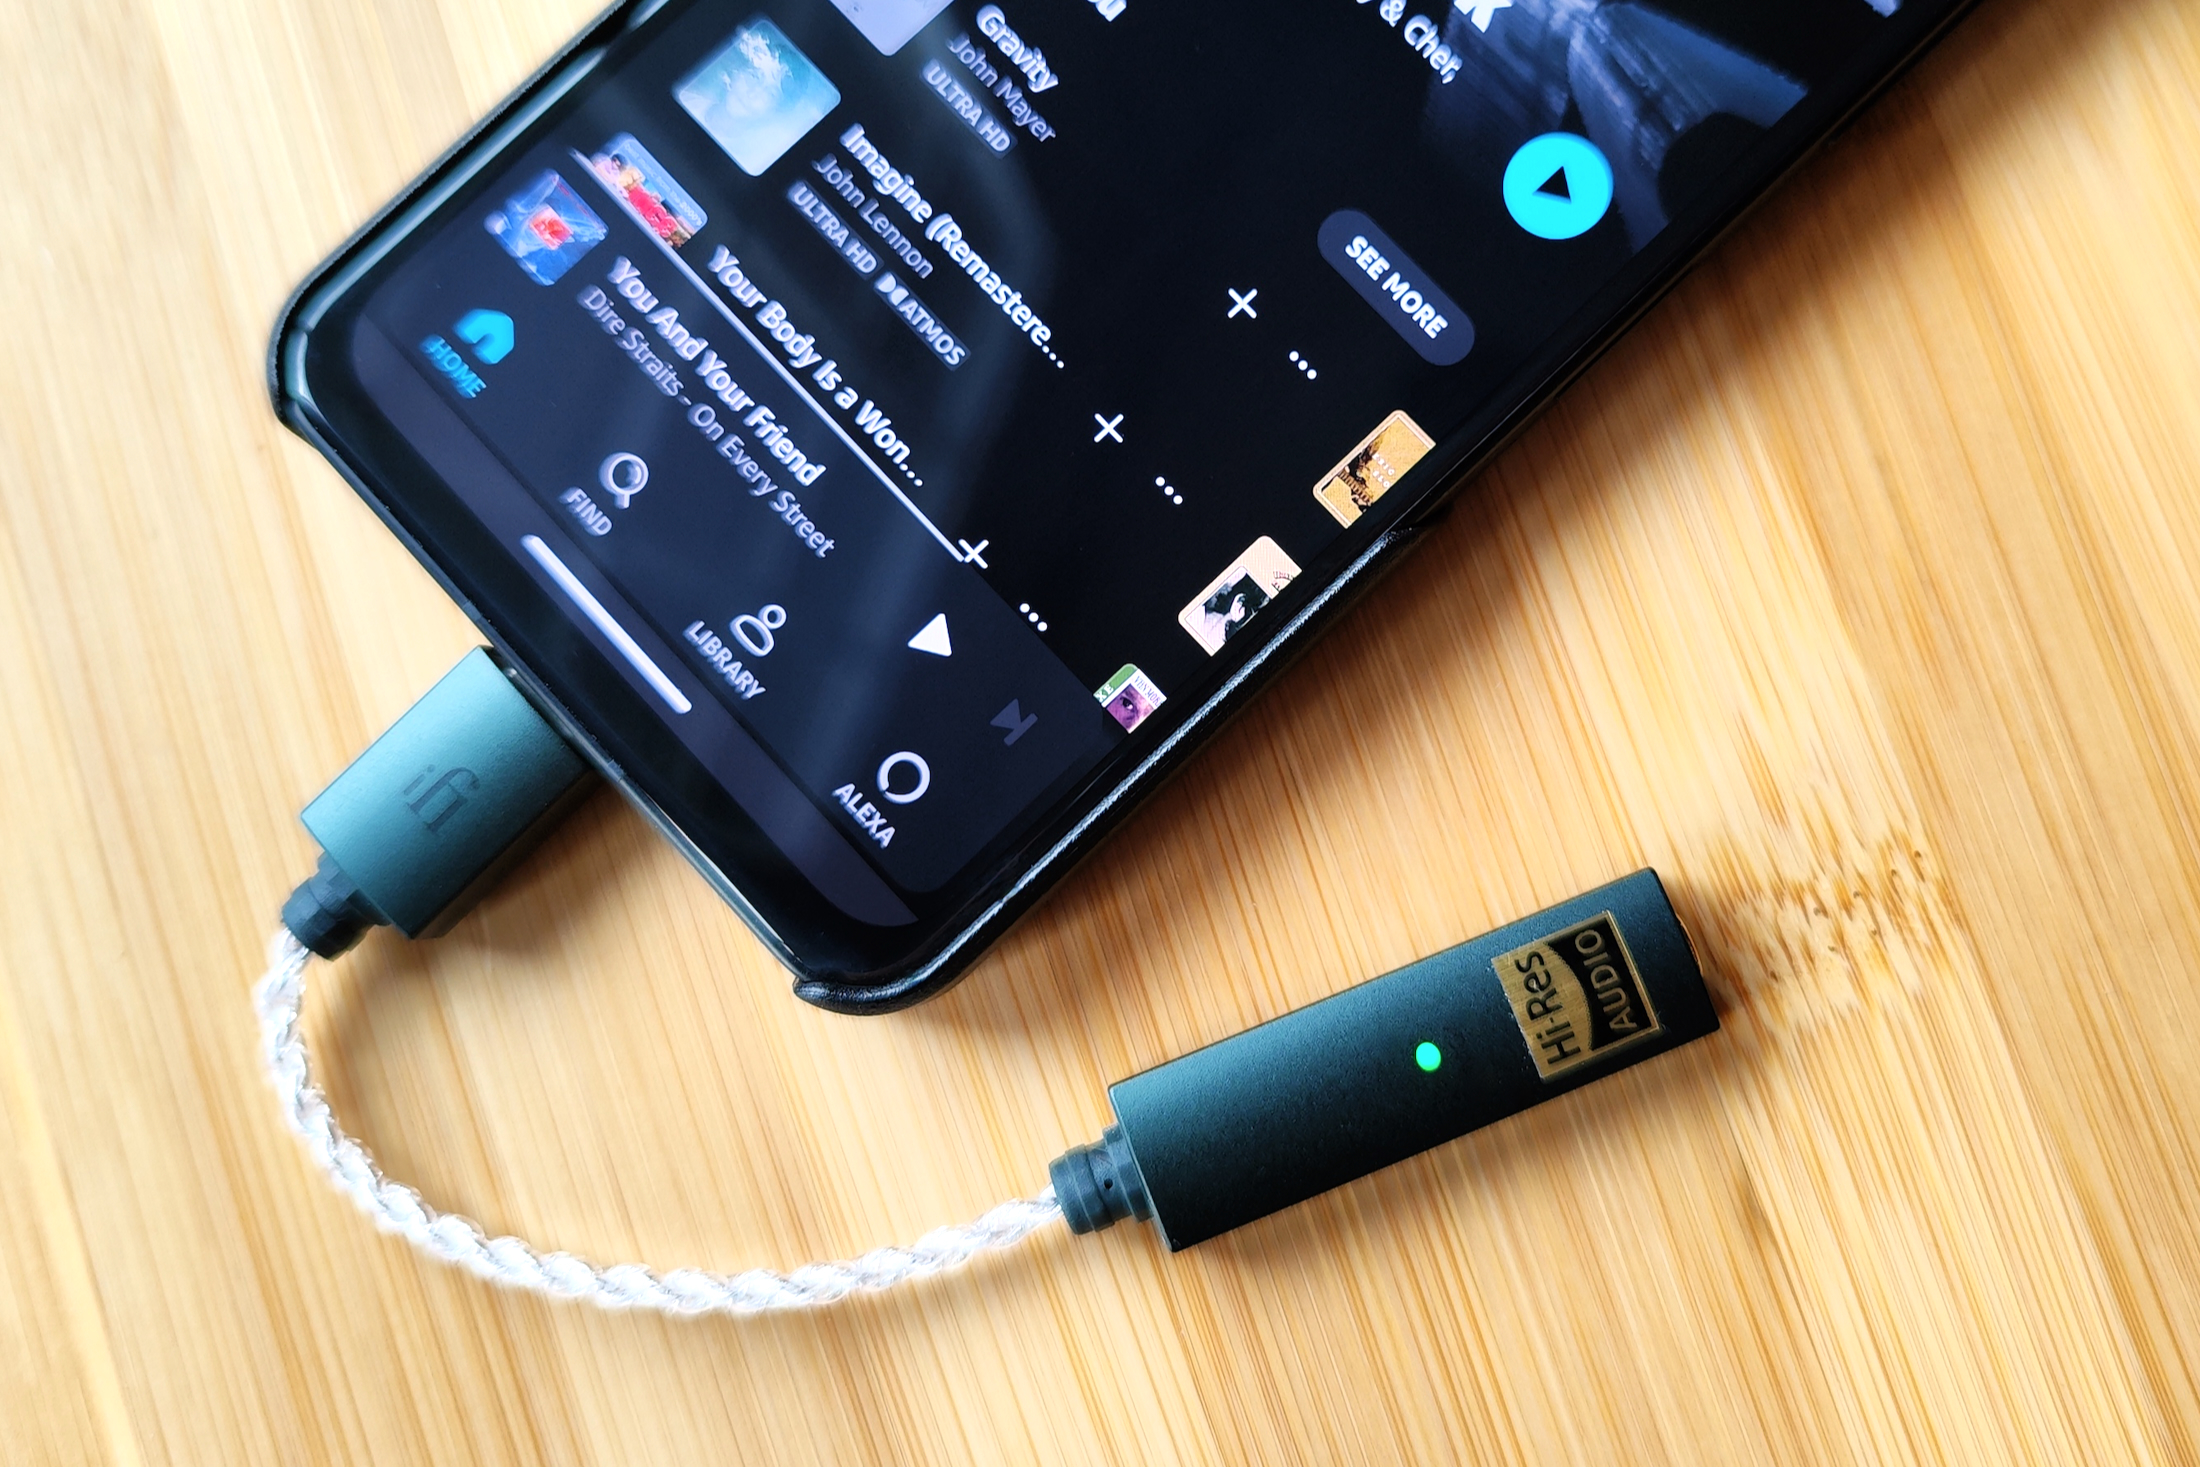 iFi Audio GO Link USB Dongle DAC and Headphone Amplifier